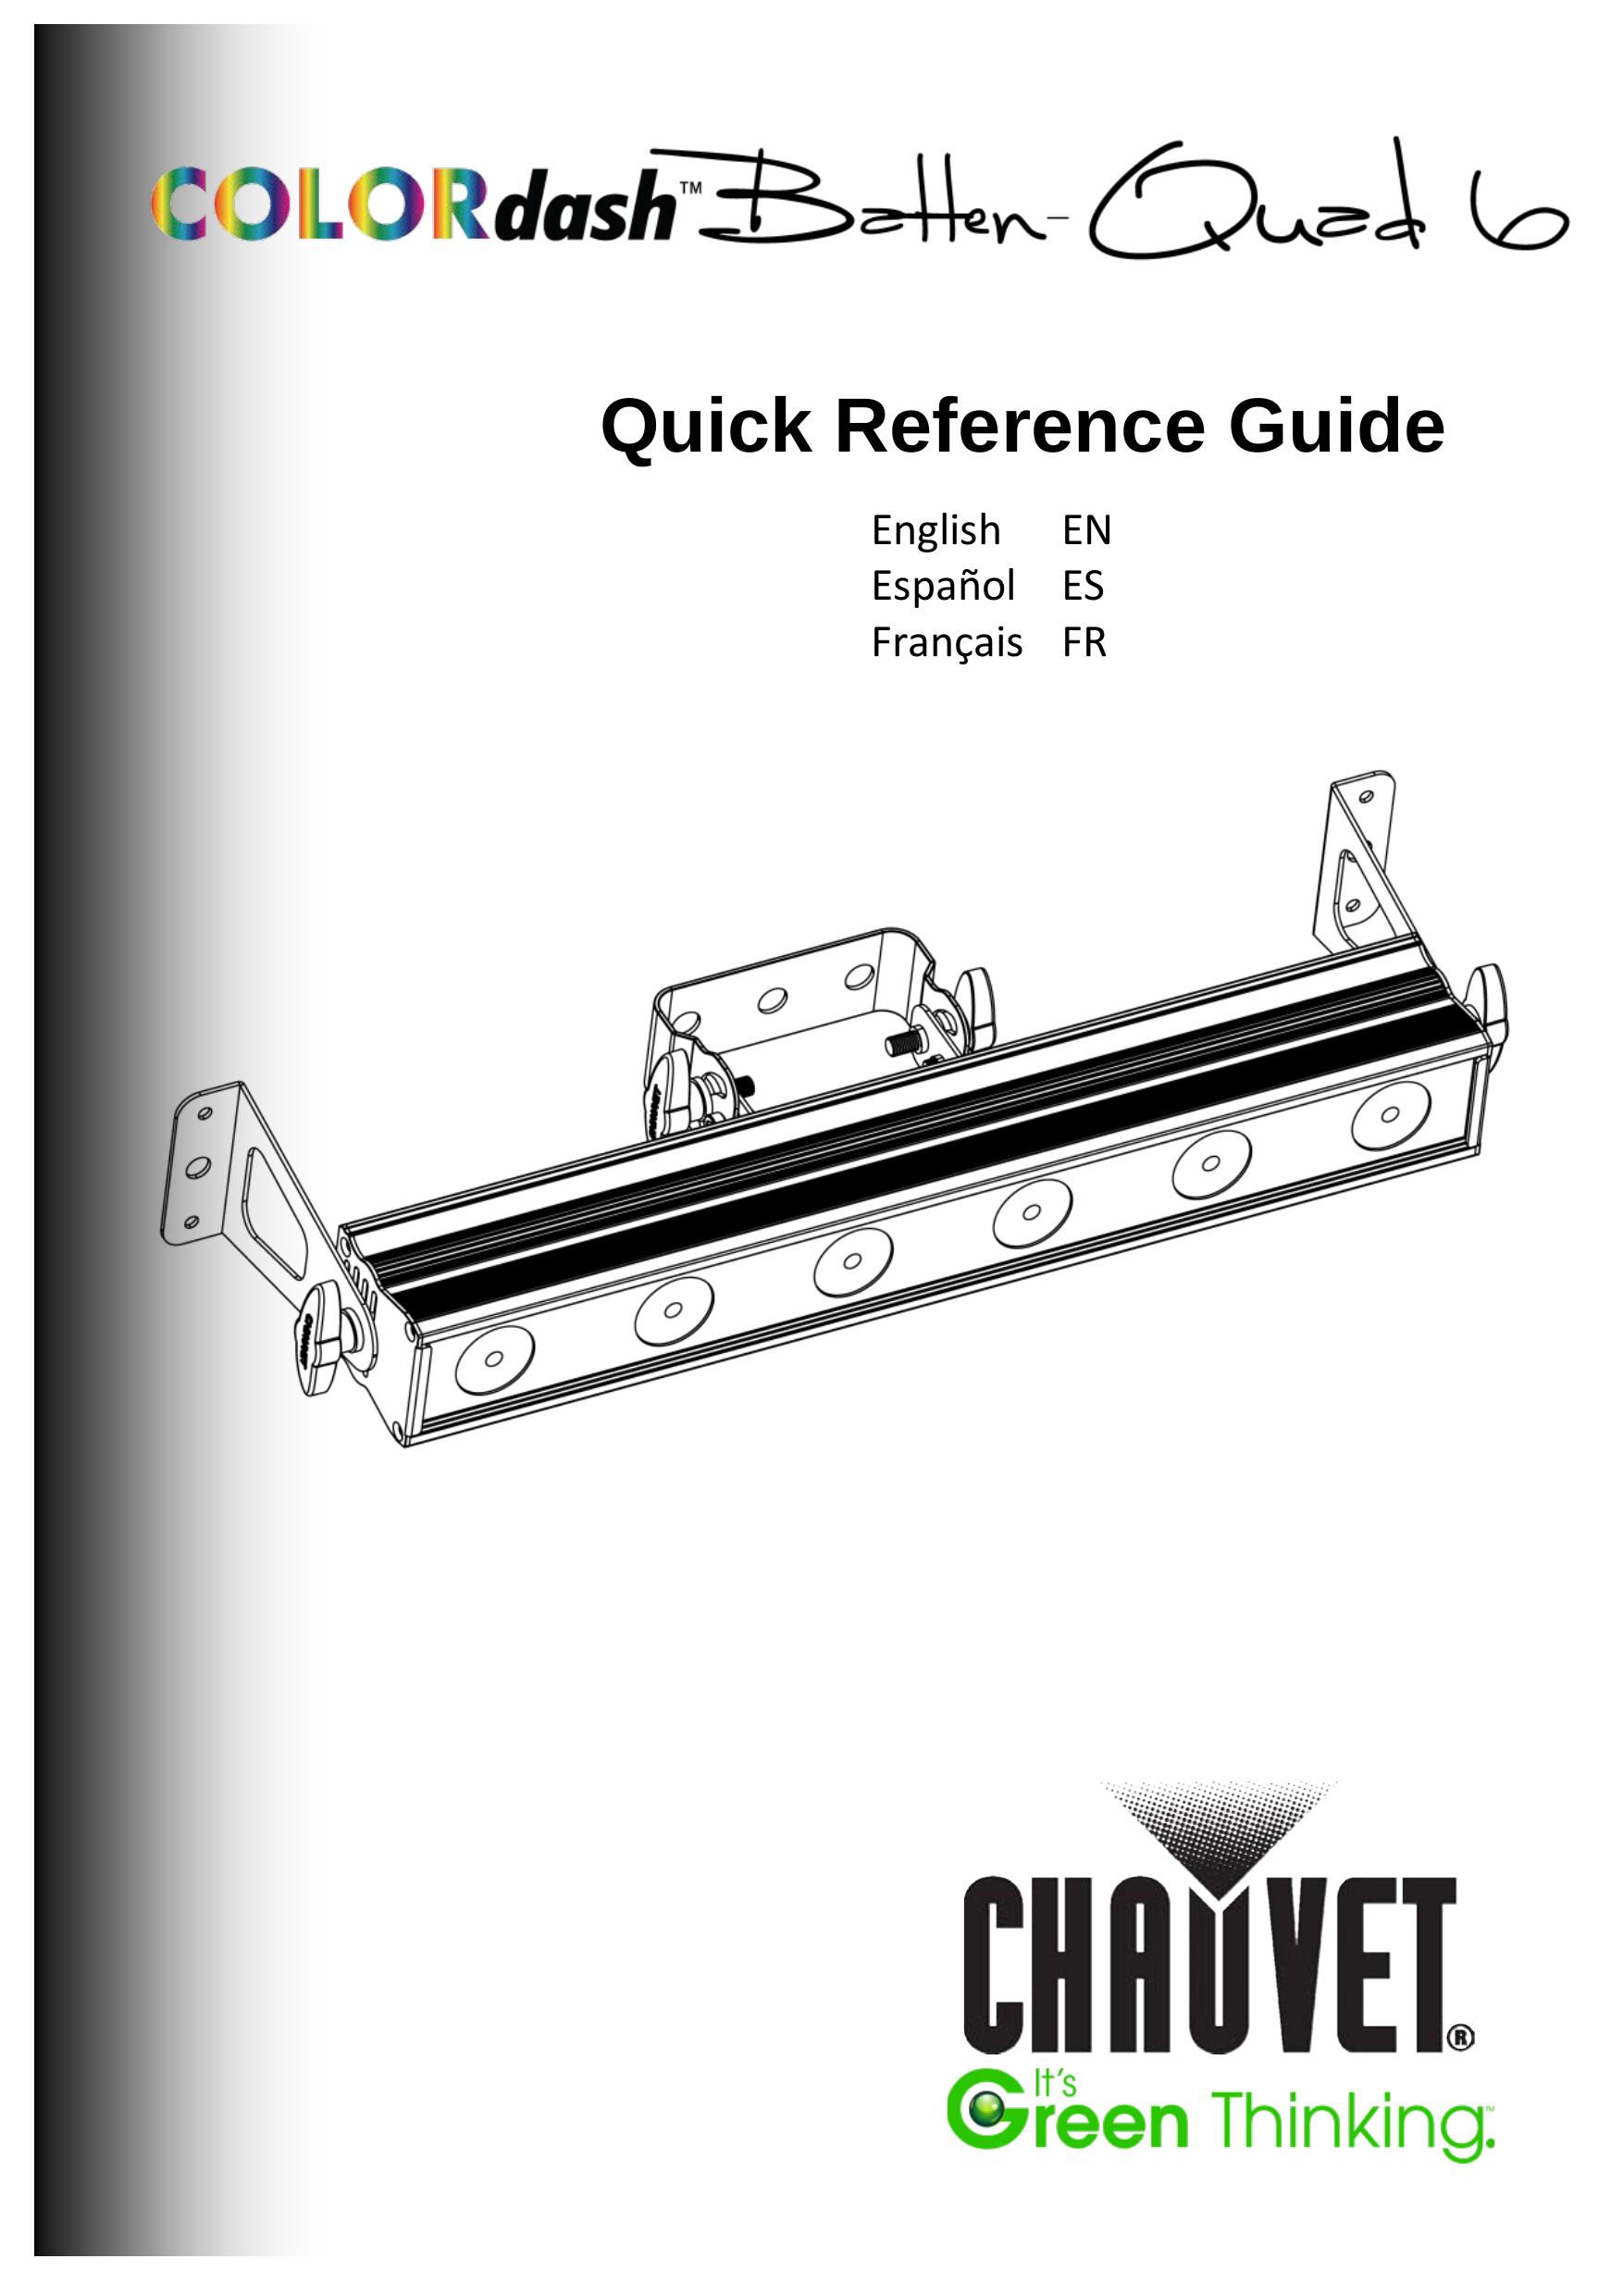 Chauvet Quad 6 Landscape Lighting User Manual